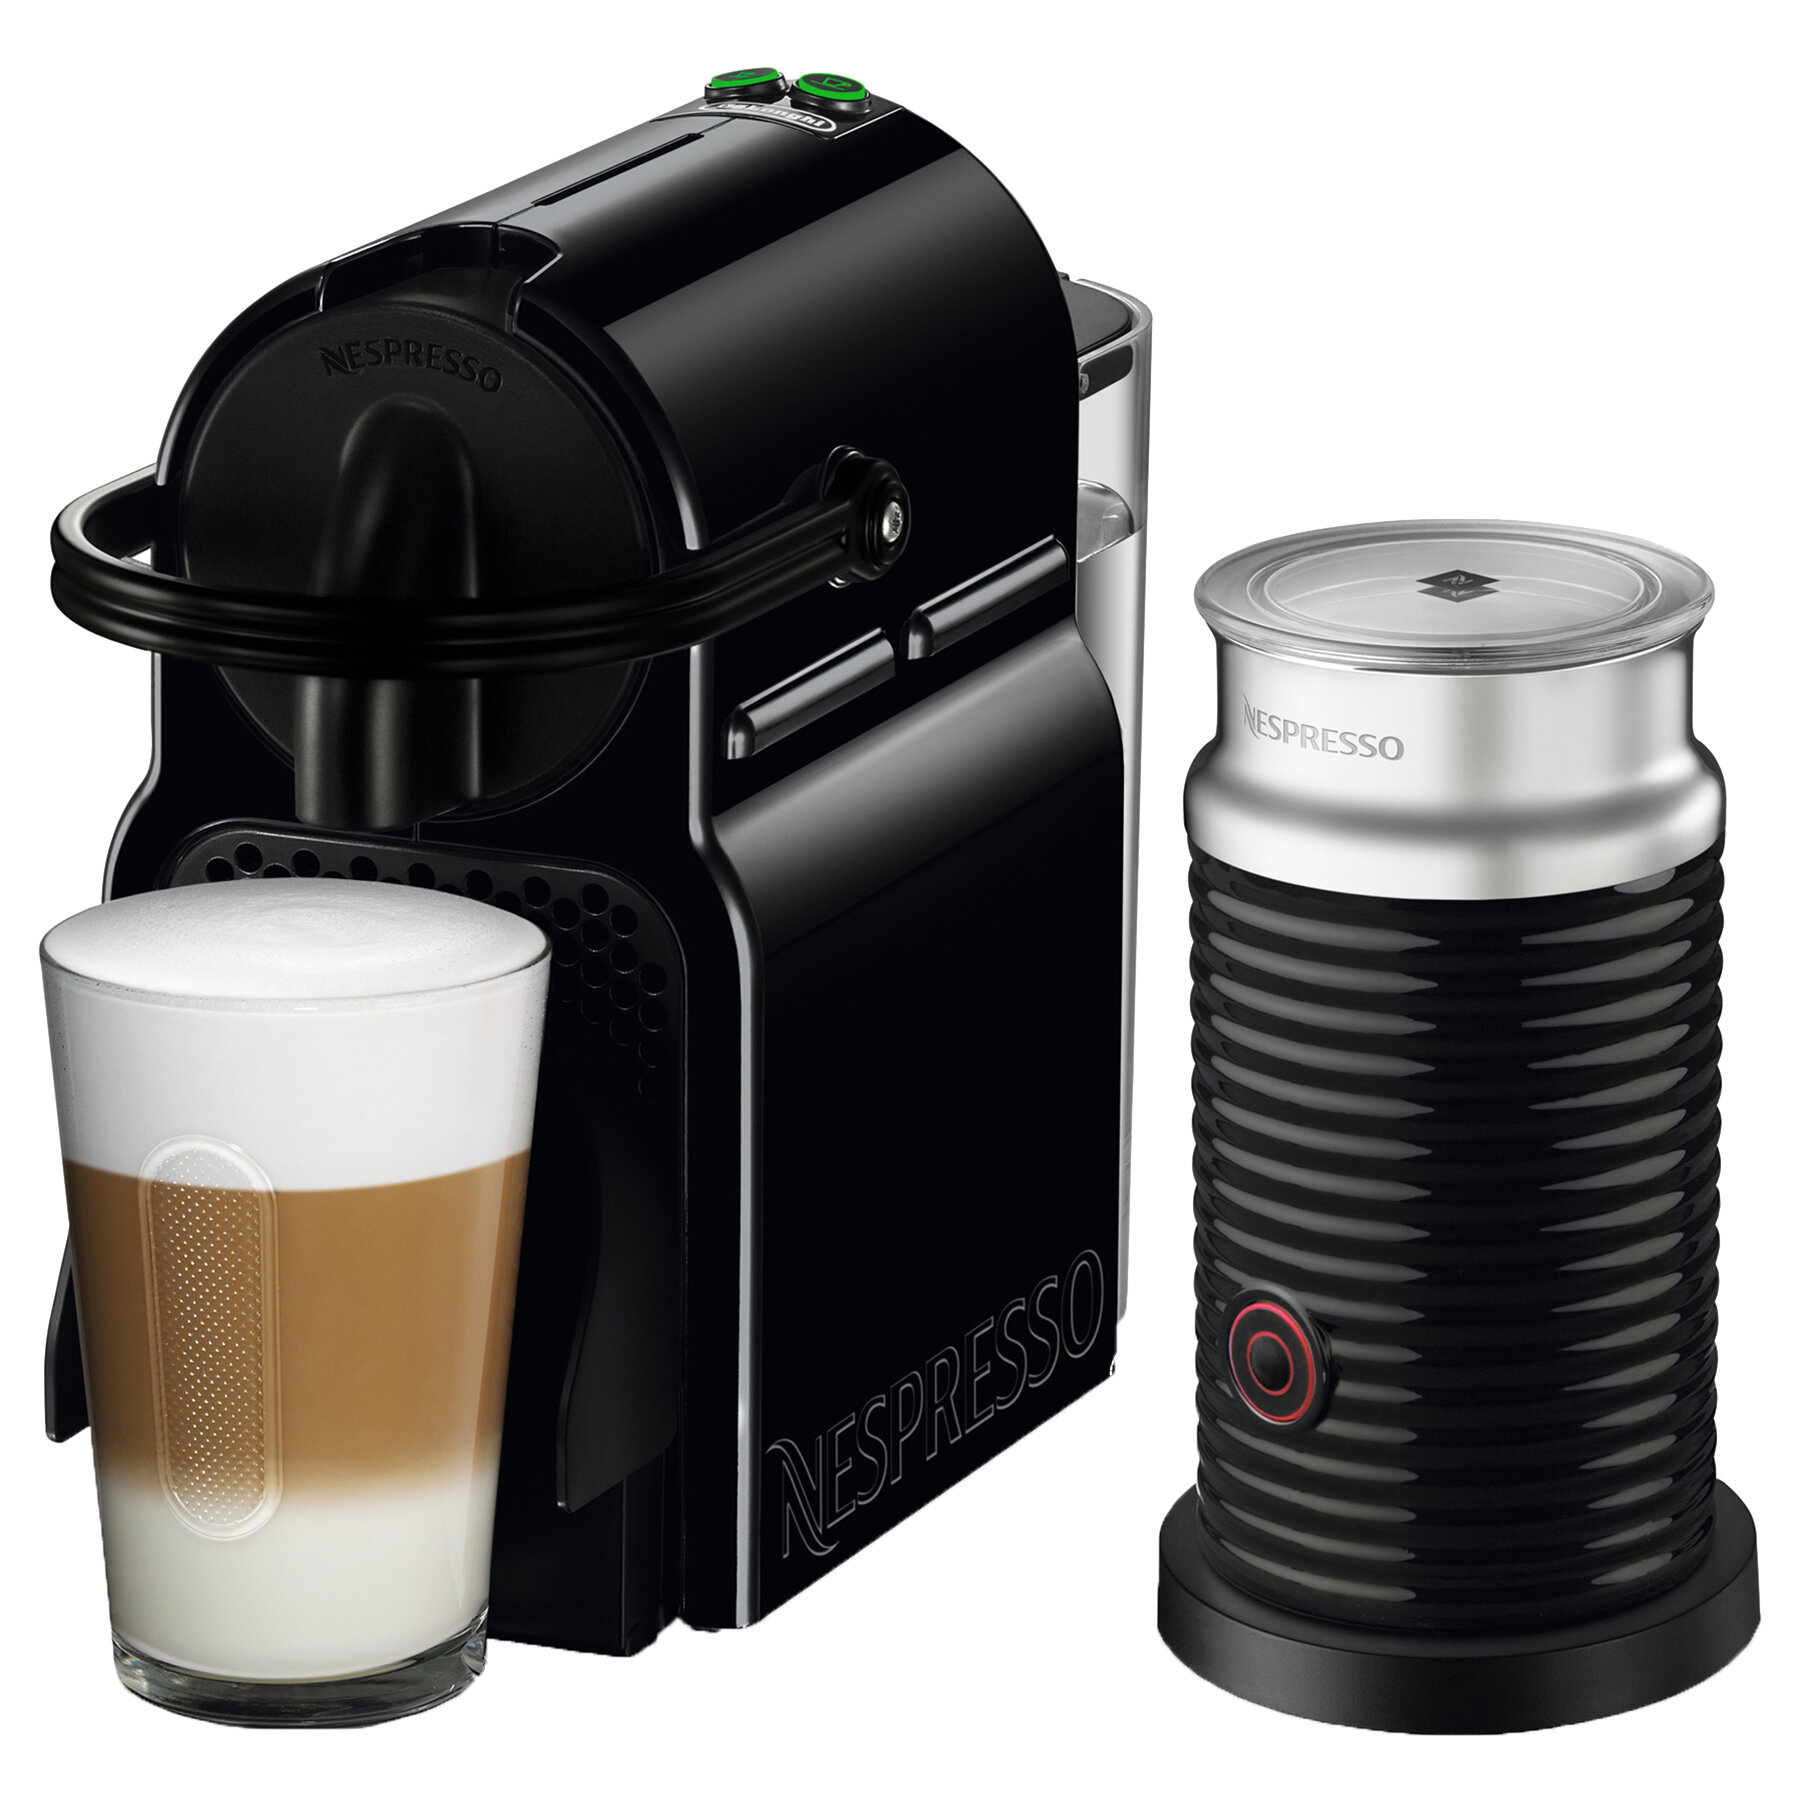 Nespresso Inissia Original Coffee and Espresso Machine with